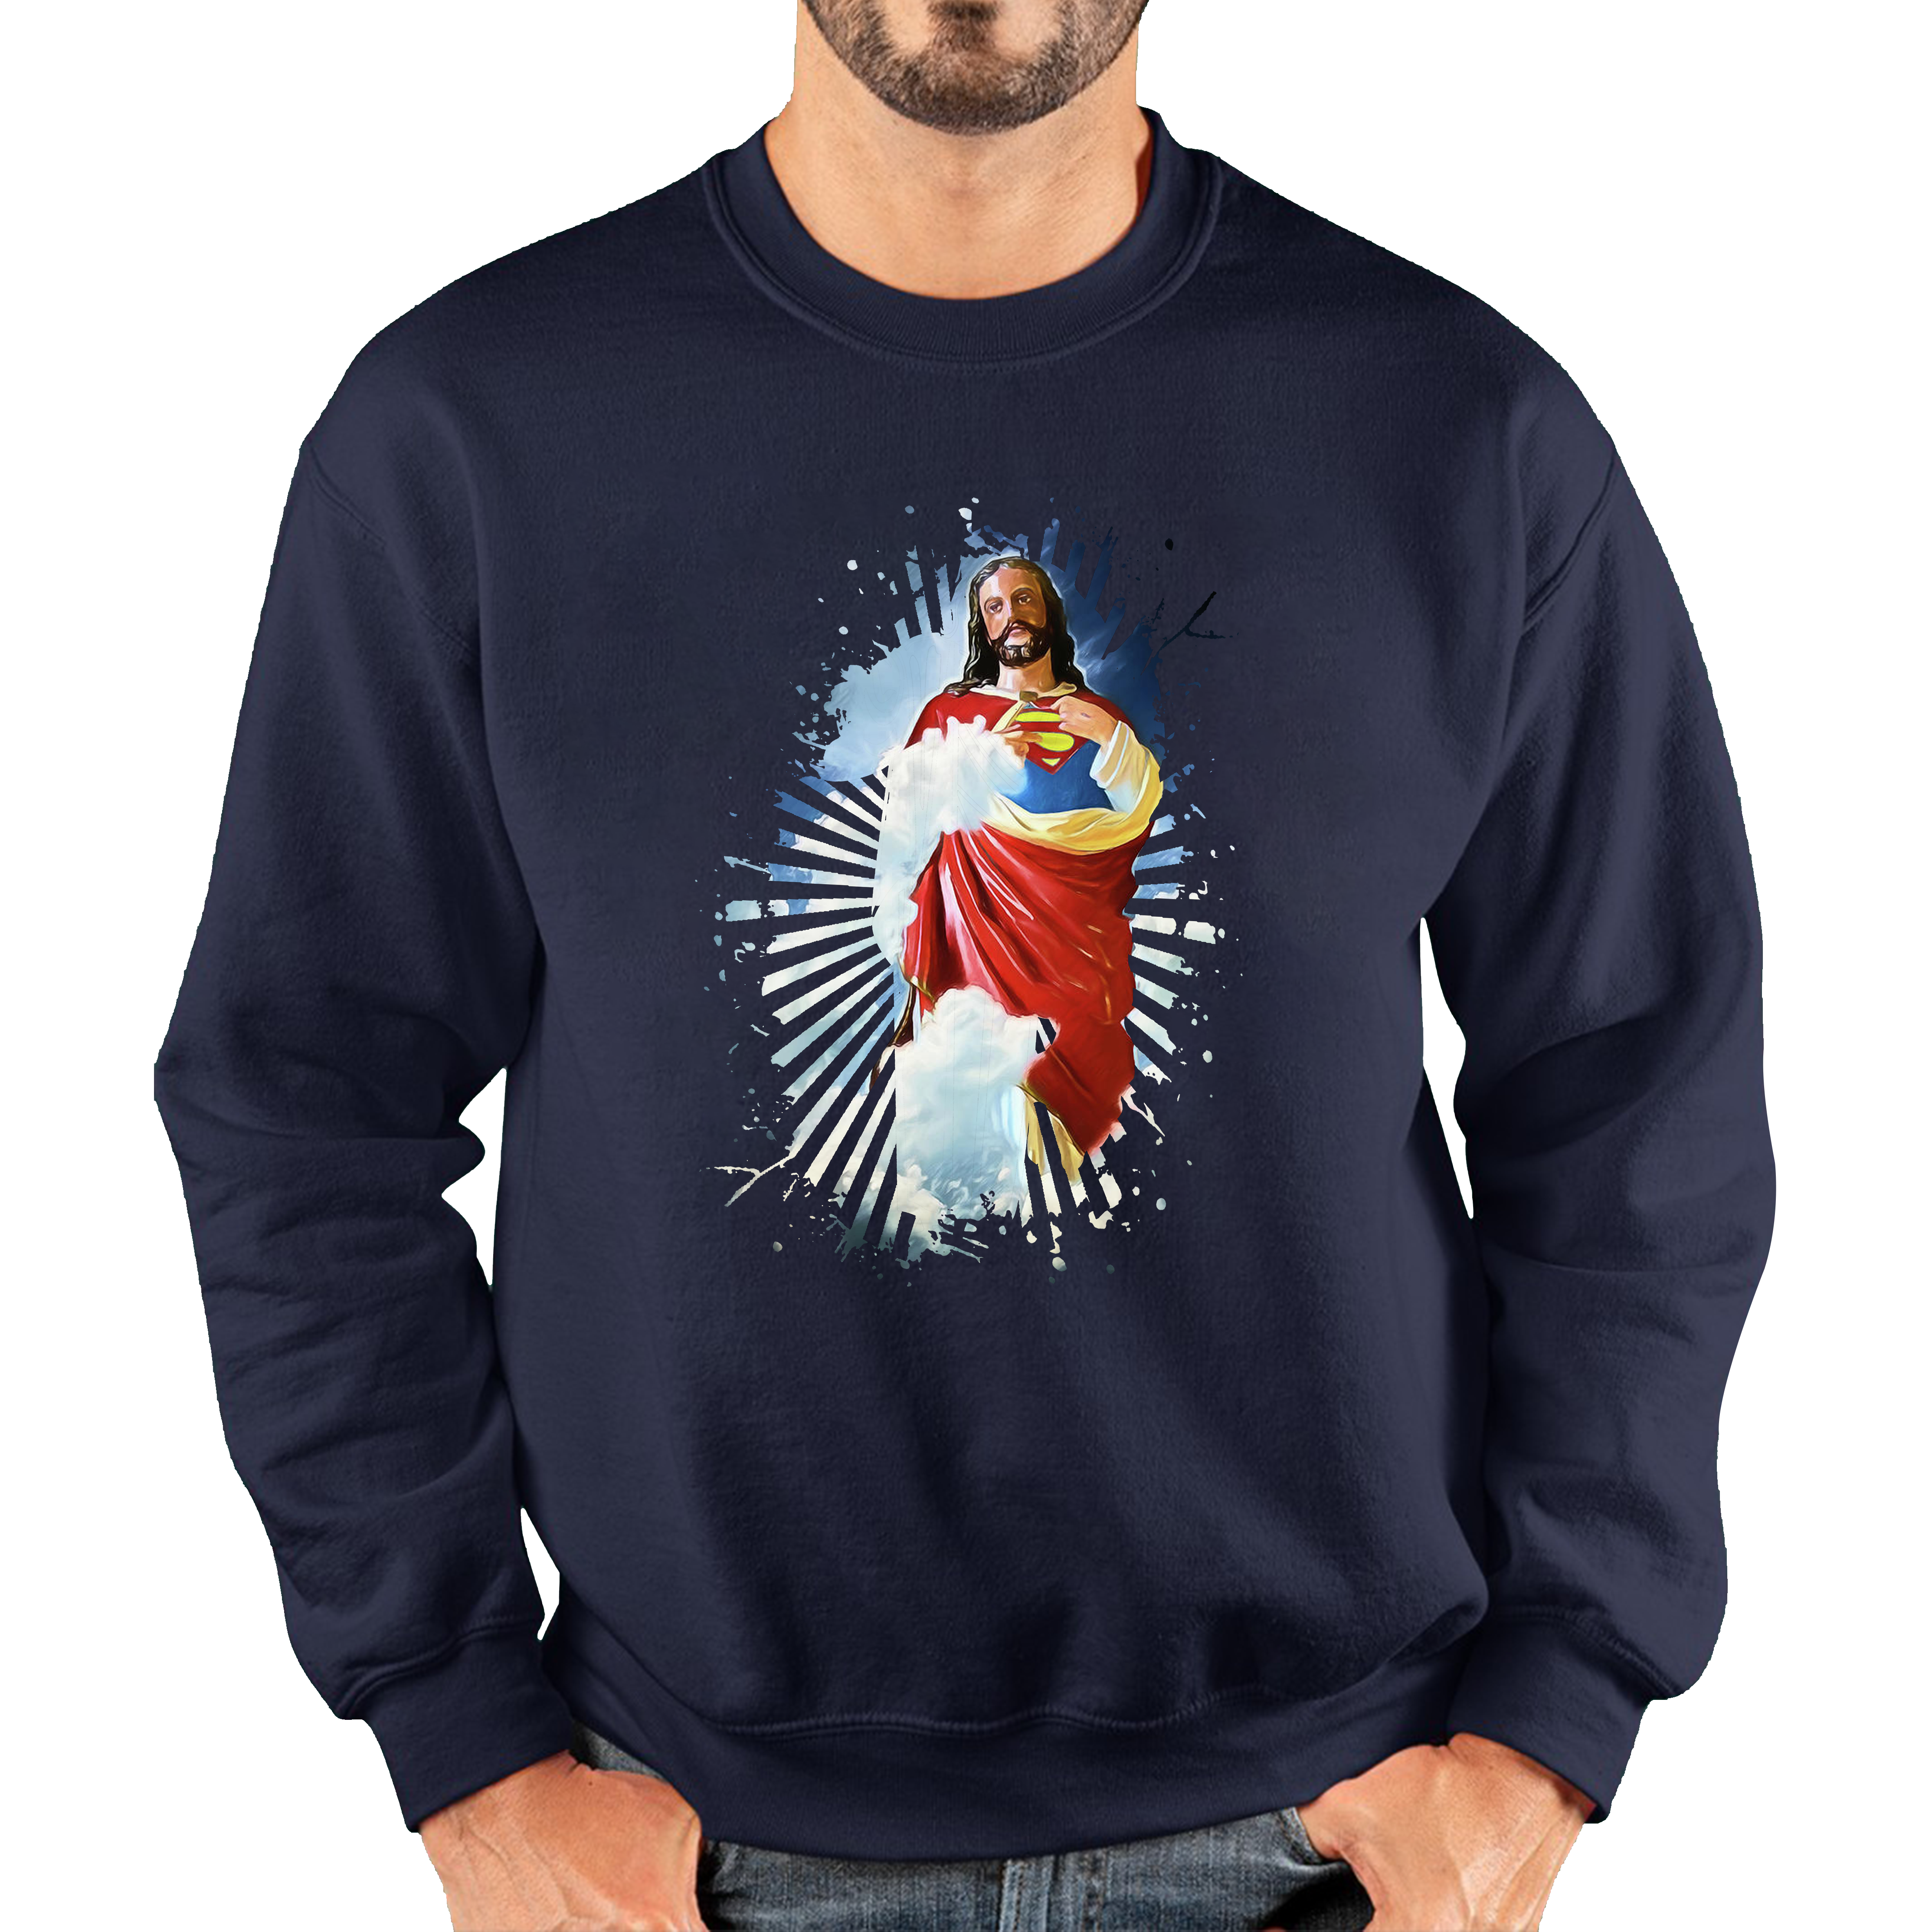 Jesus Christ Superman Jumper Superman Inspired Spoof Avengers Superhero Christian Gift Unisex Sweatshirt